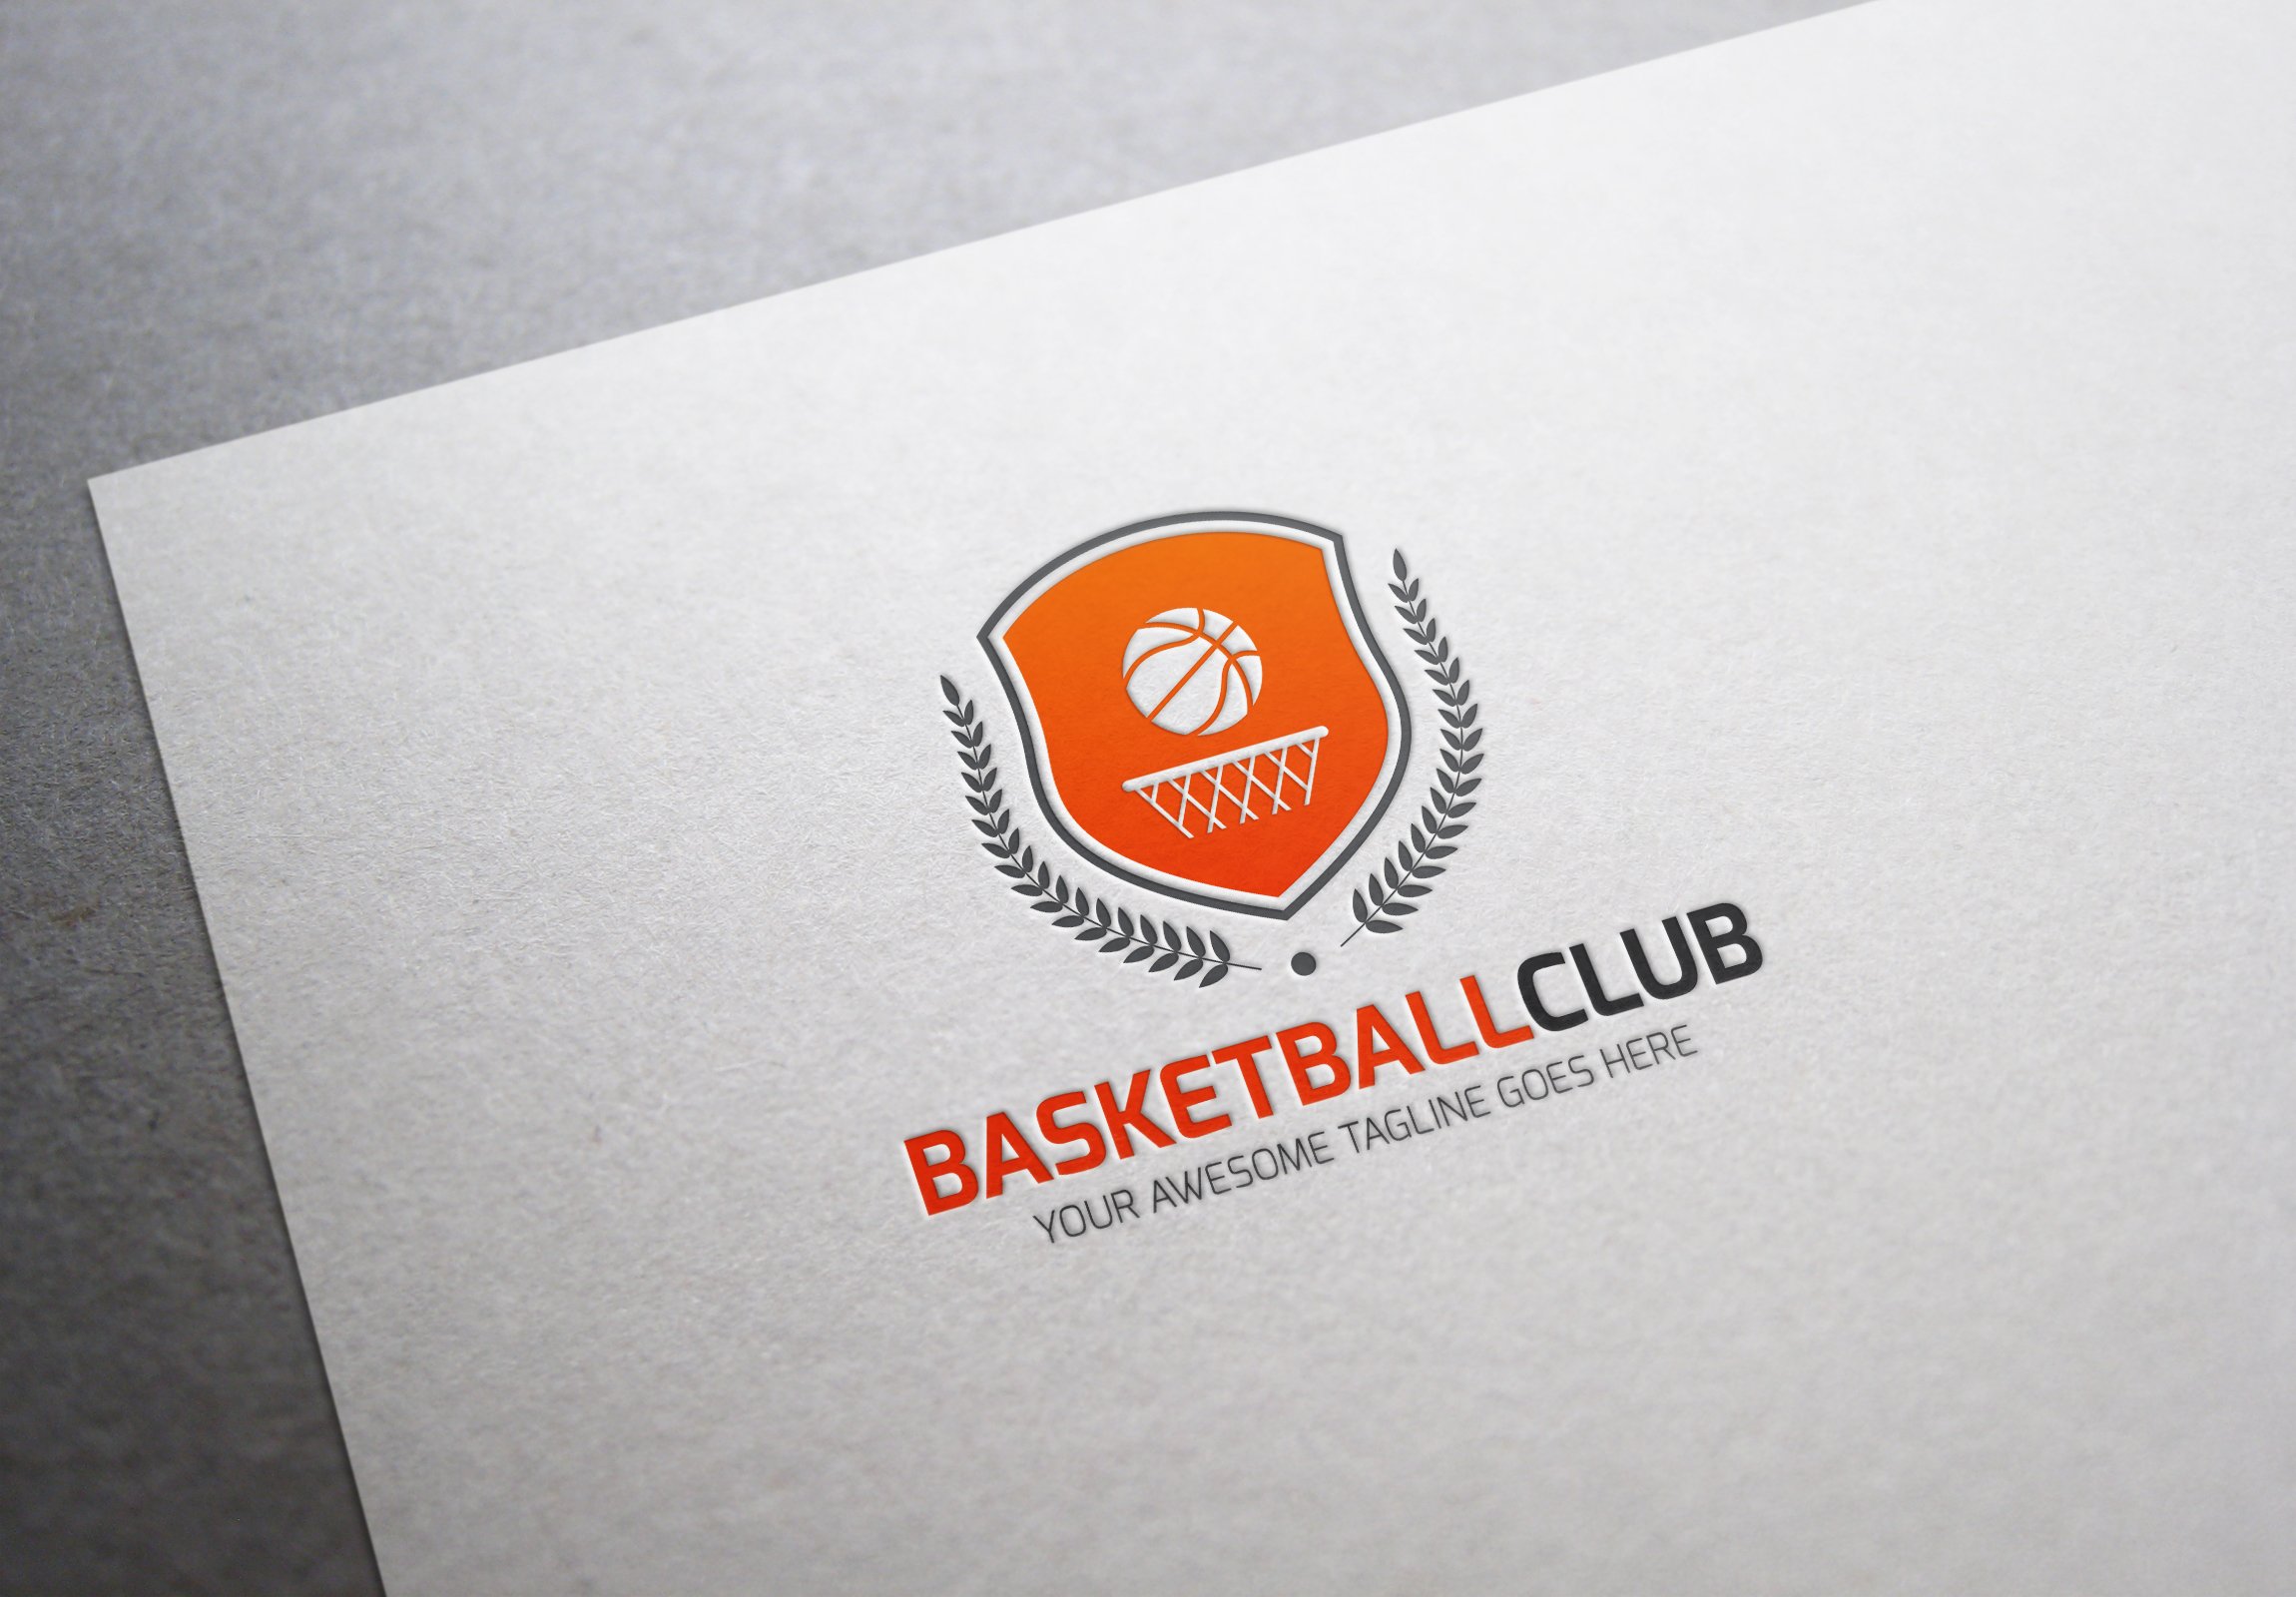 Grey paper with an orange basketball logo.